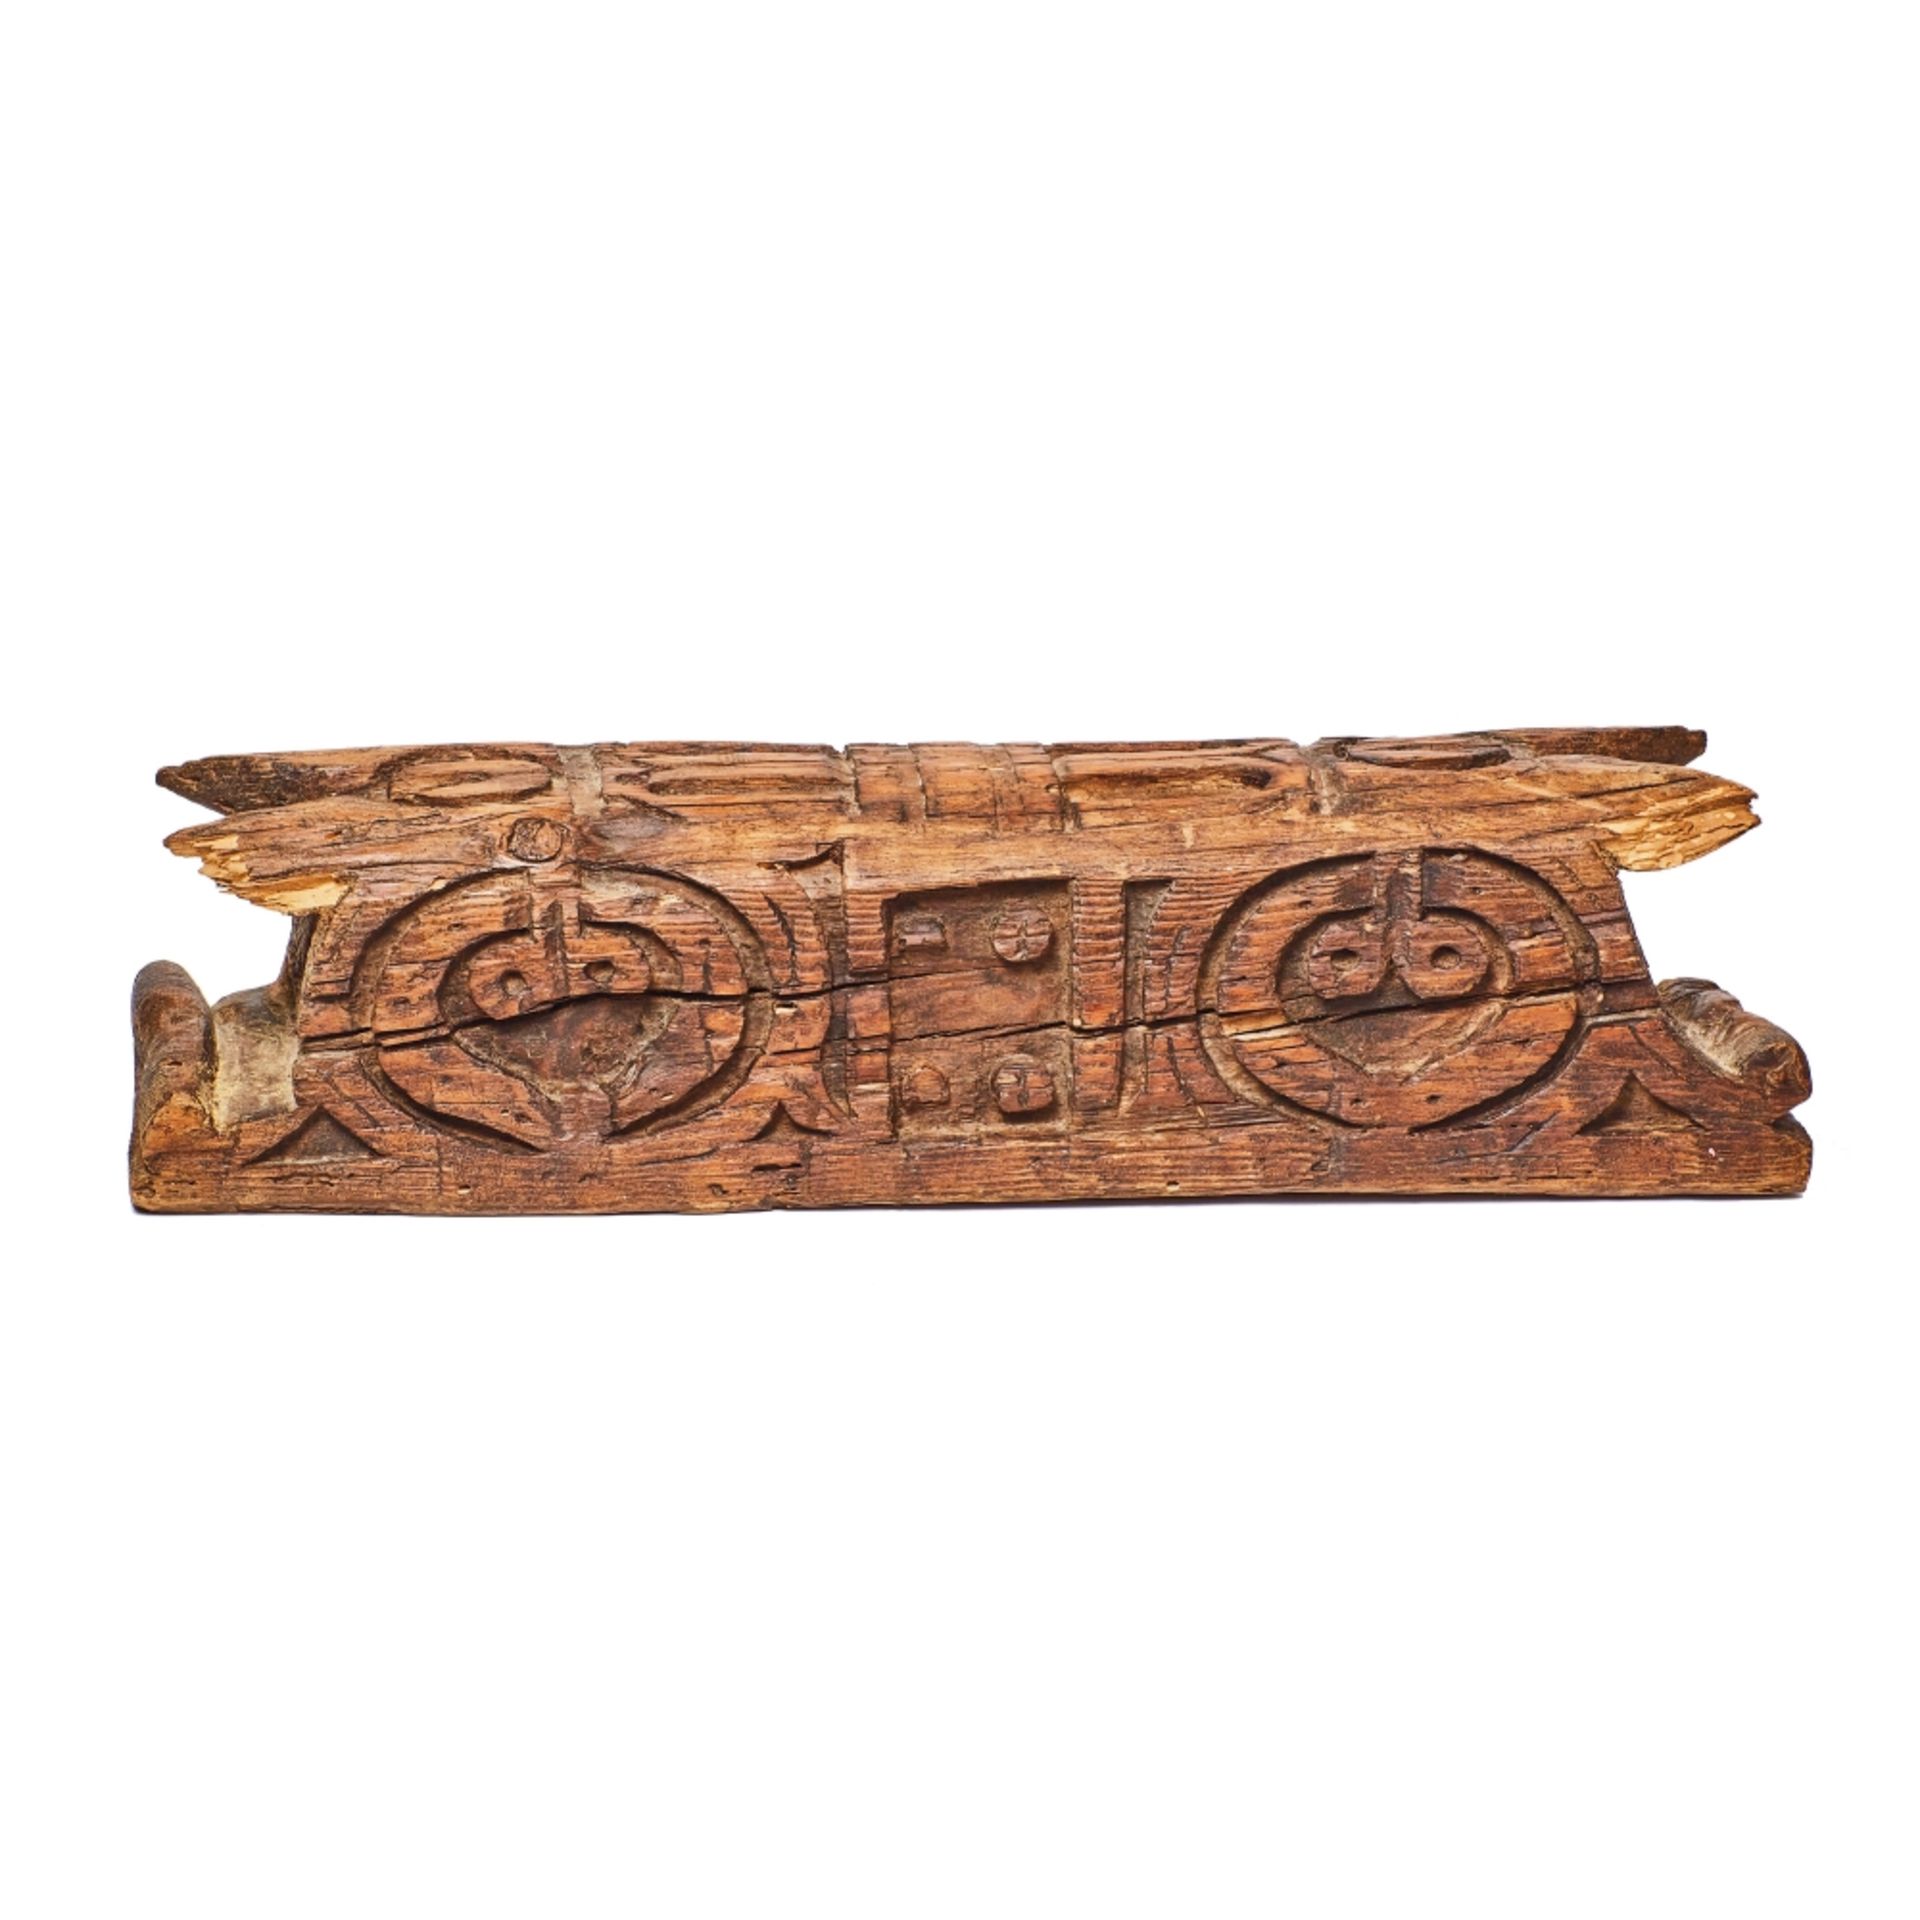 Viga hispano-árabe en madera tallada, s.XI-XII.